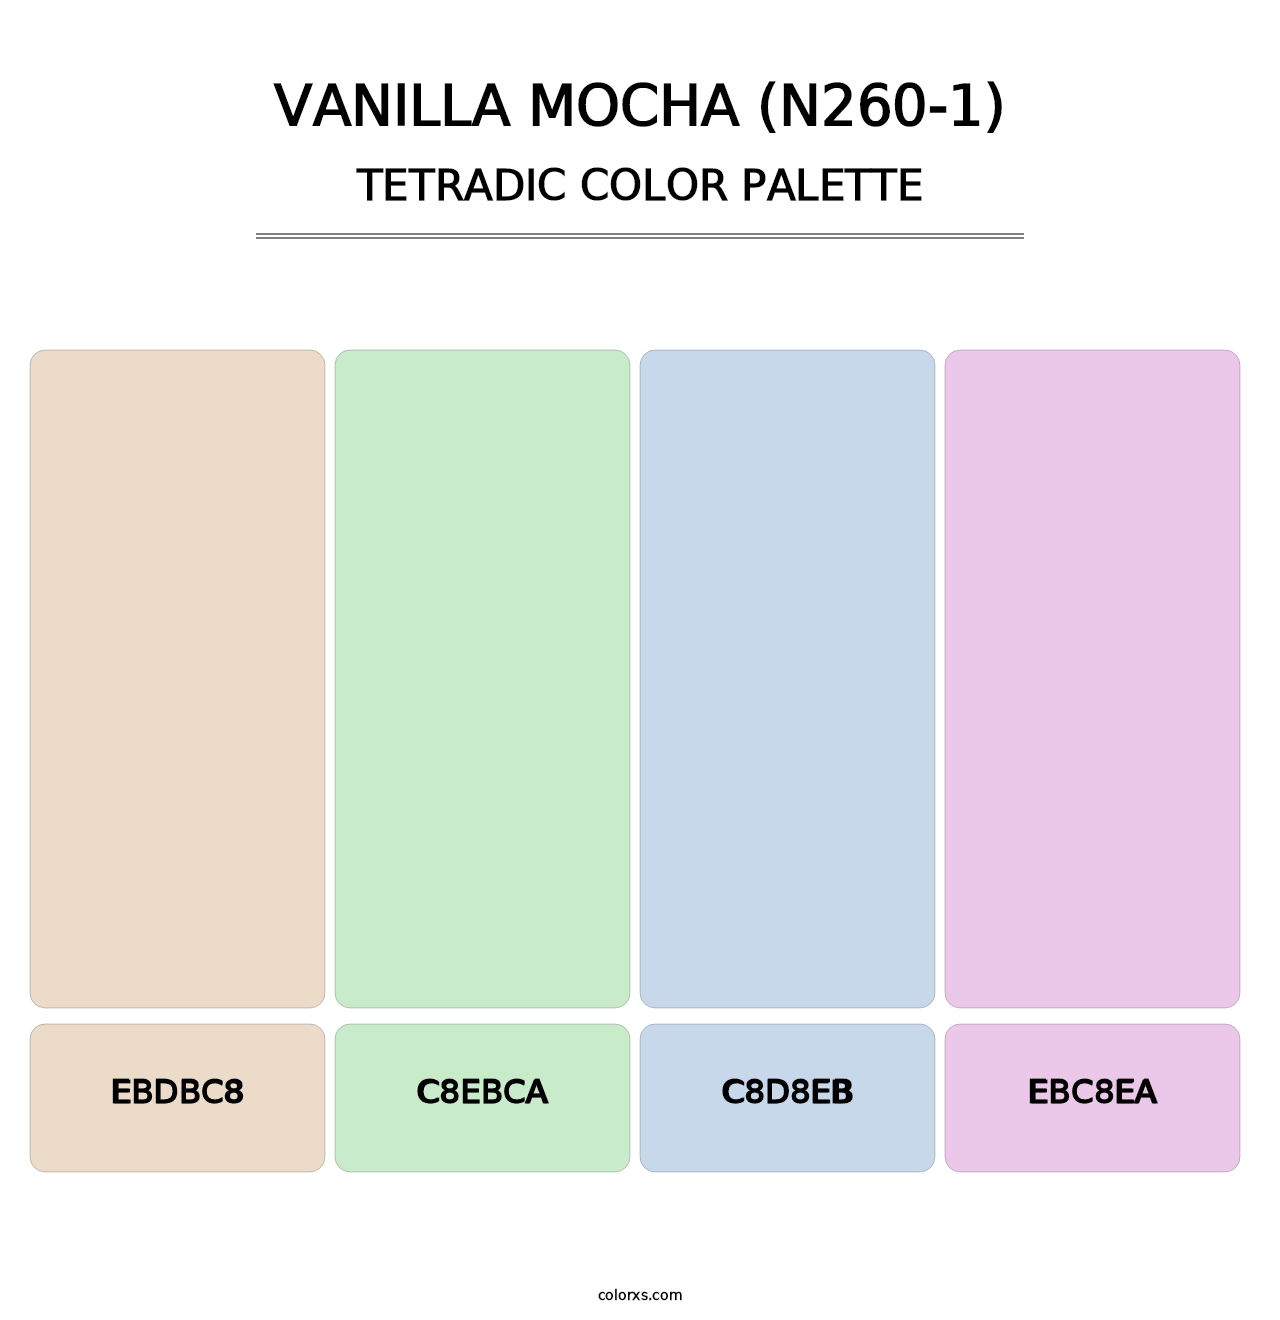 Vanilla Mocha (N260-1) - Tetradic Color Palette